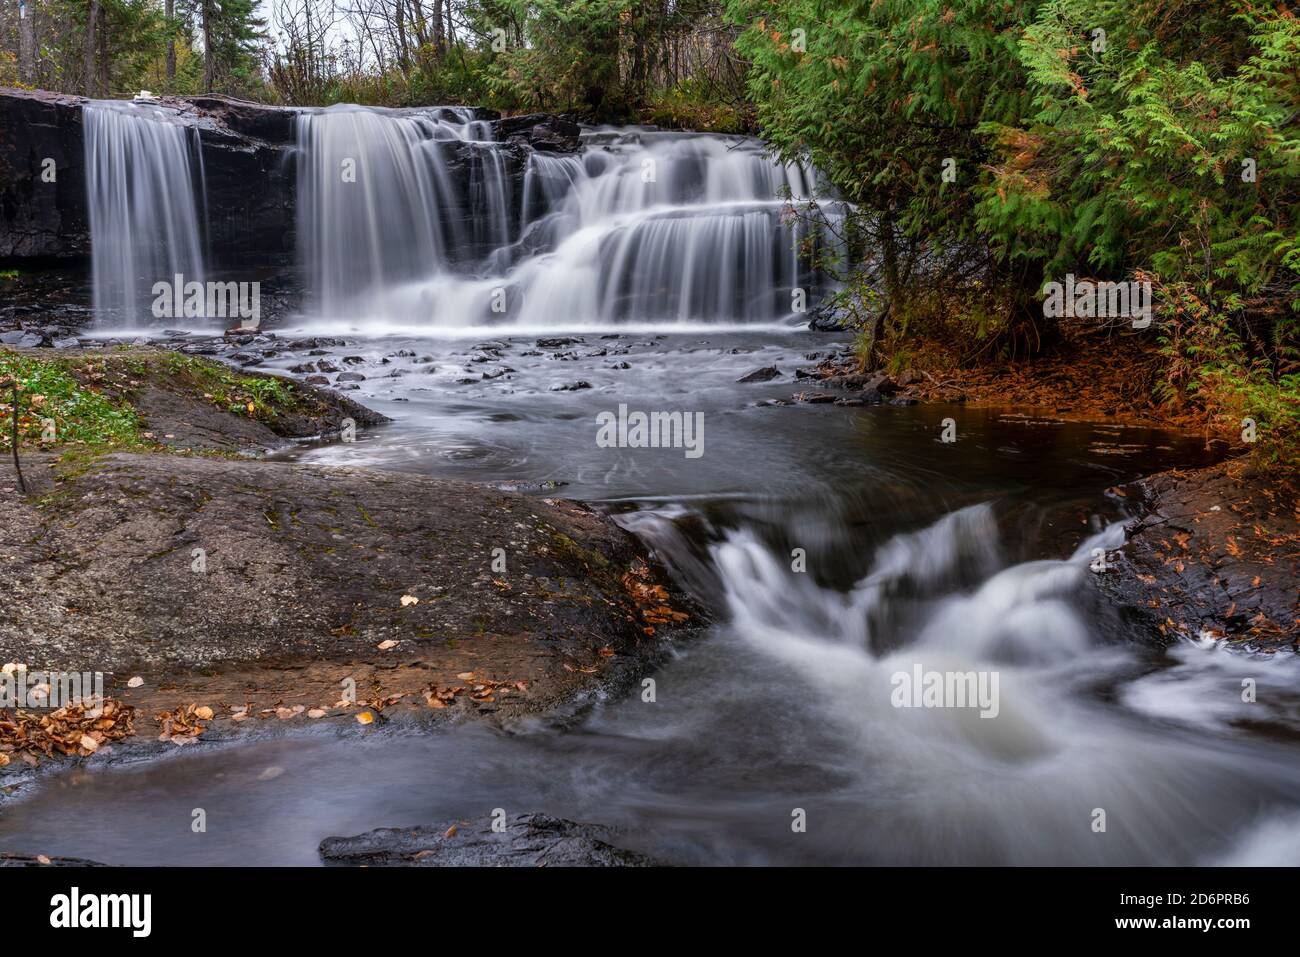 Raleigh Falls in der Nähe von Ignace, Ontario, Kanada. Stockfoto